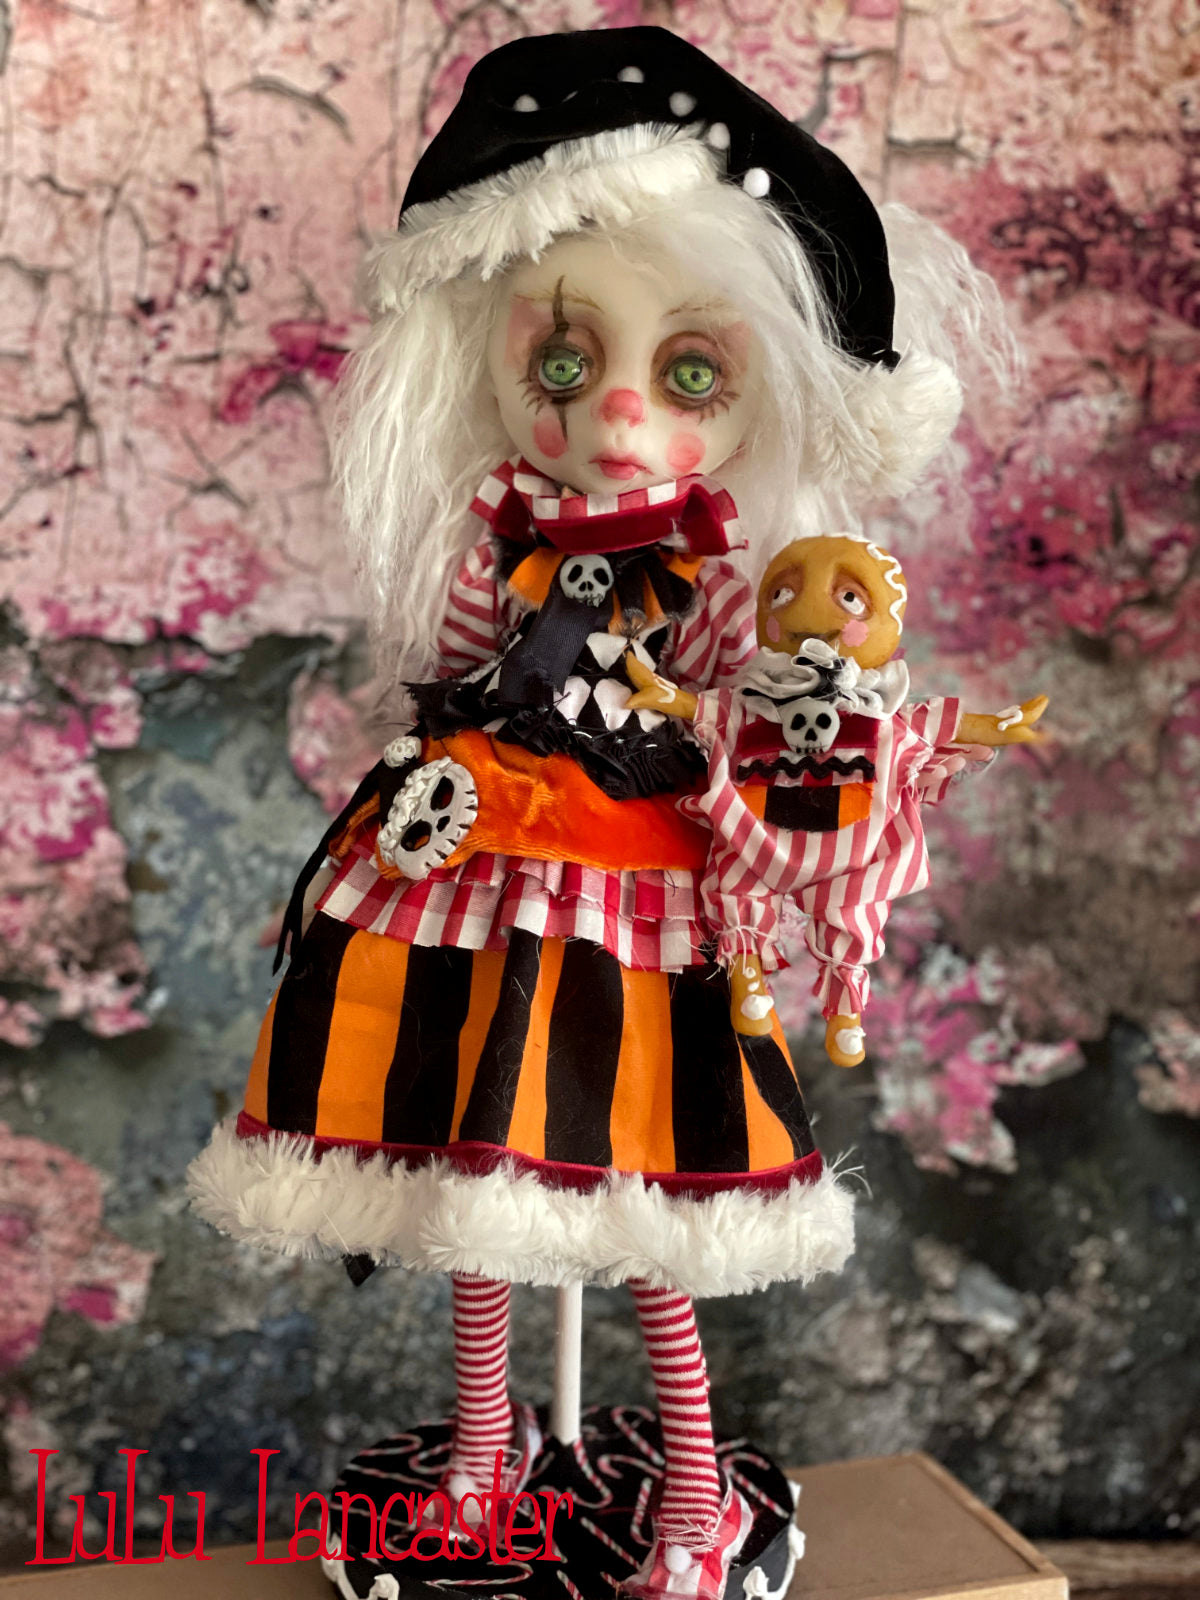 DoriDark the Creepmas Clown Original LuLu Lancaster Art Doll